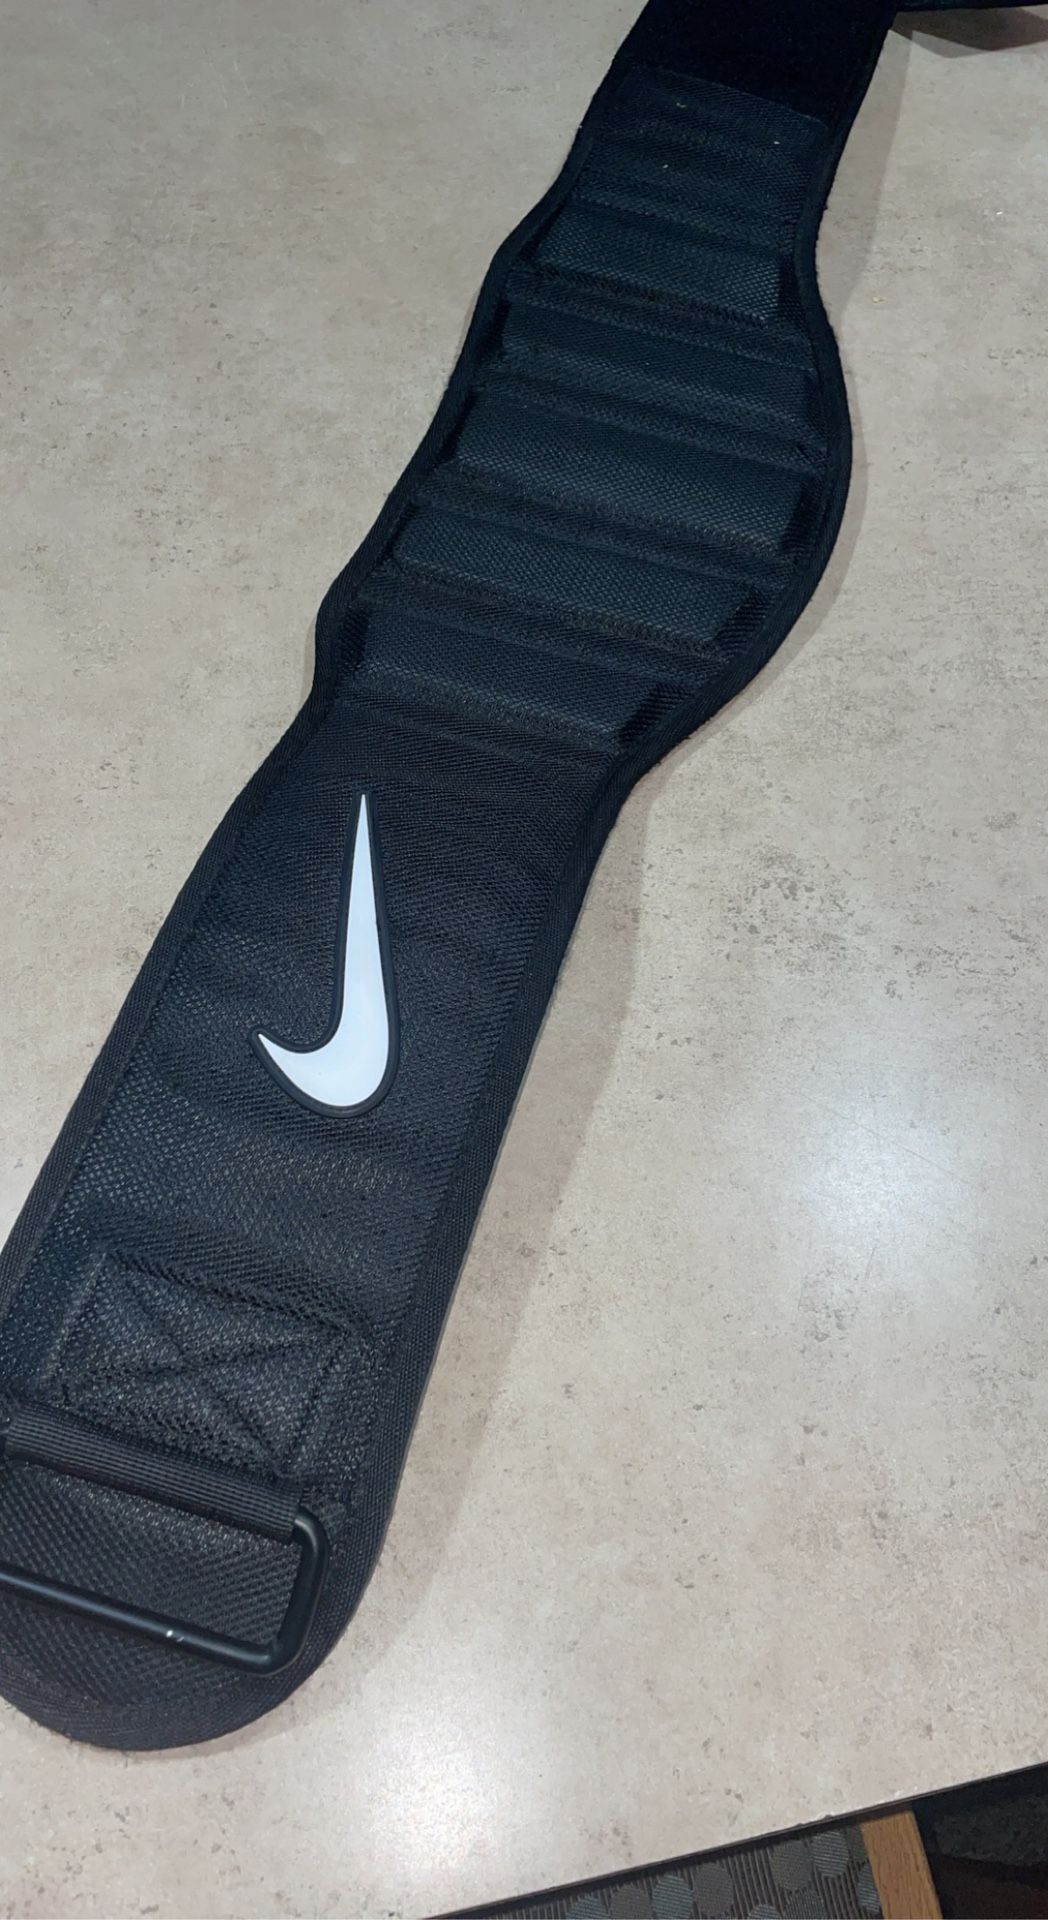 Bel terug Ideaal Meetbaar Nike Lifting Belt for Sale in Duncannon, PA - OfferUp